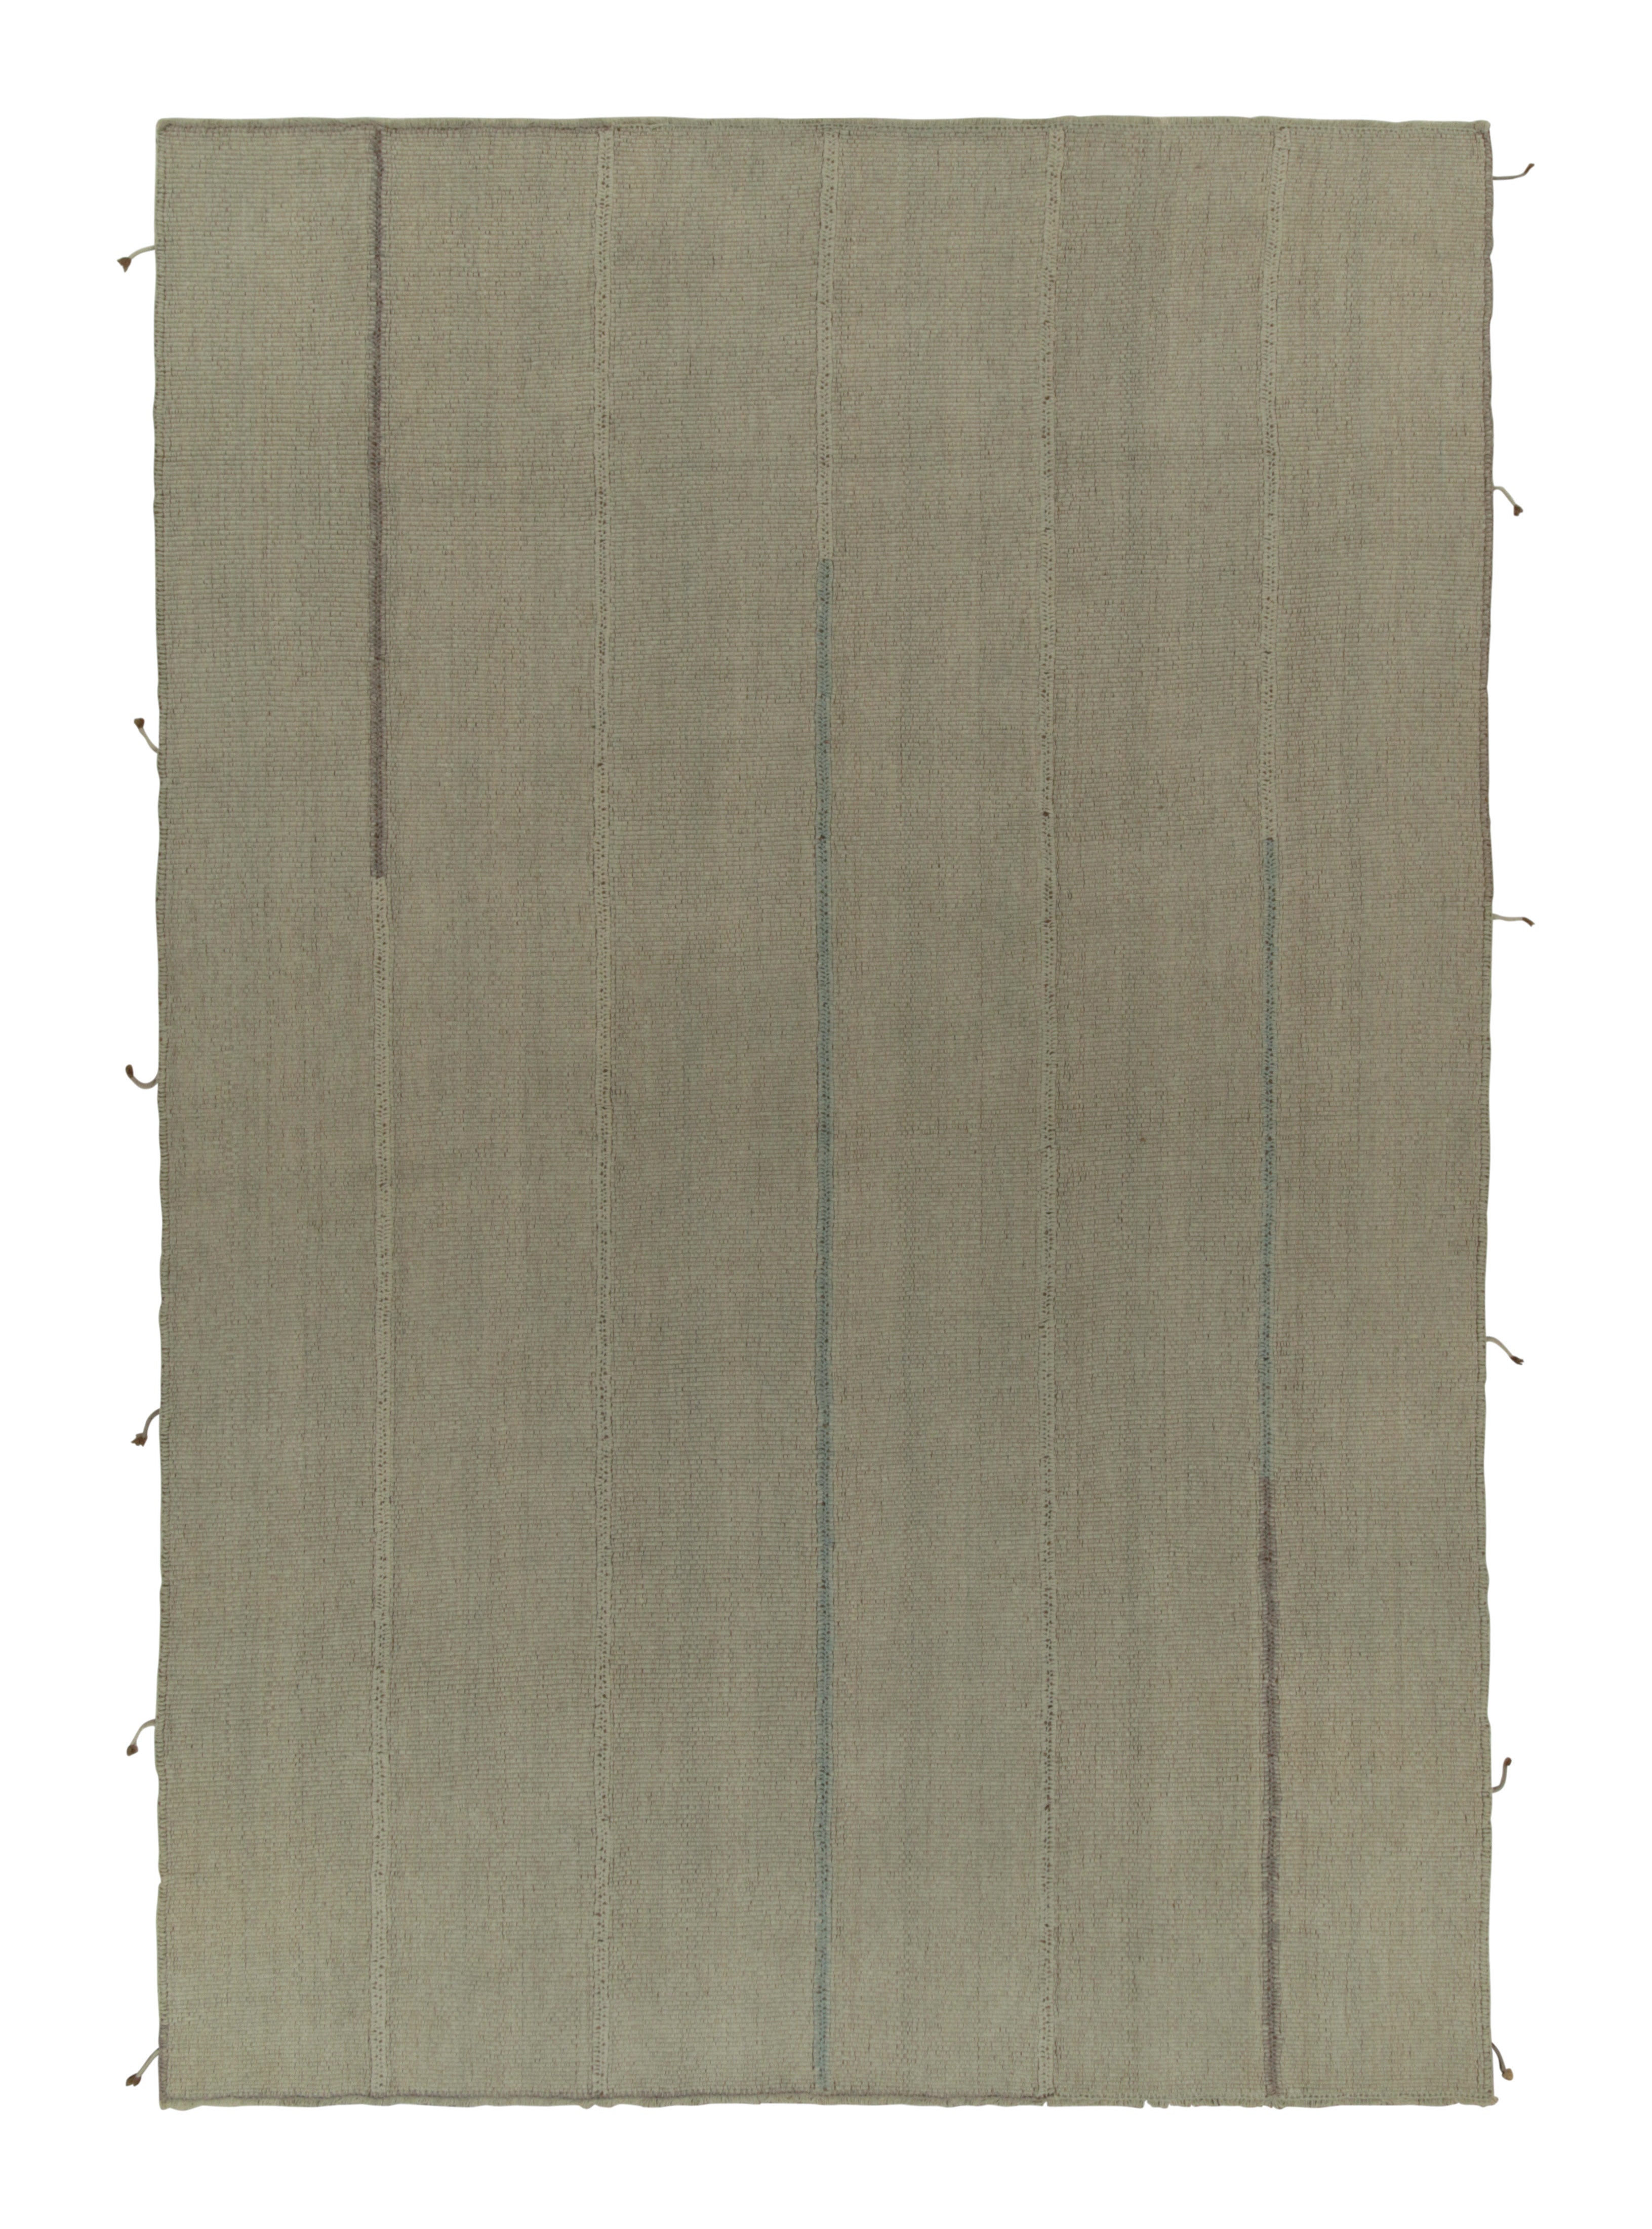 Rug & Kilim’s Custom Kilim in Beige-Brown and Blue, Panel Woven style